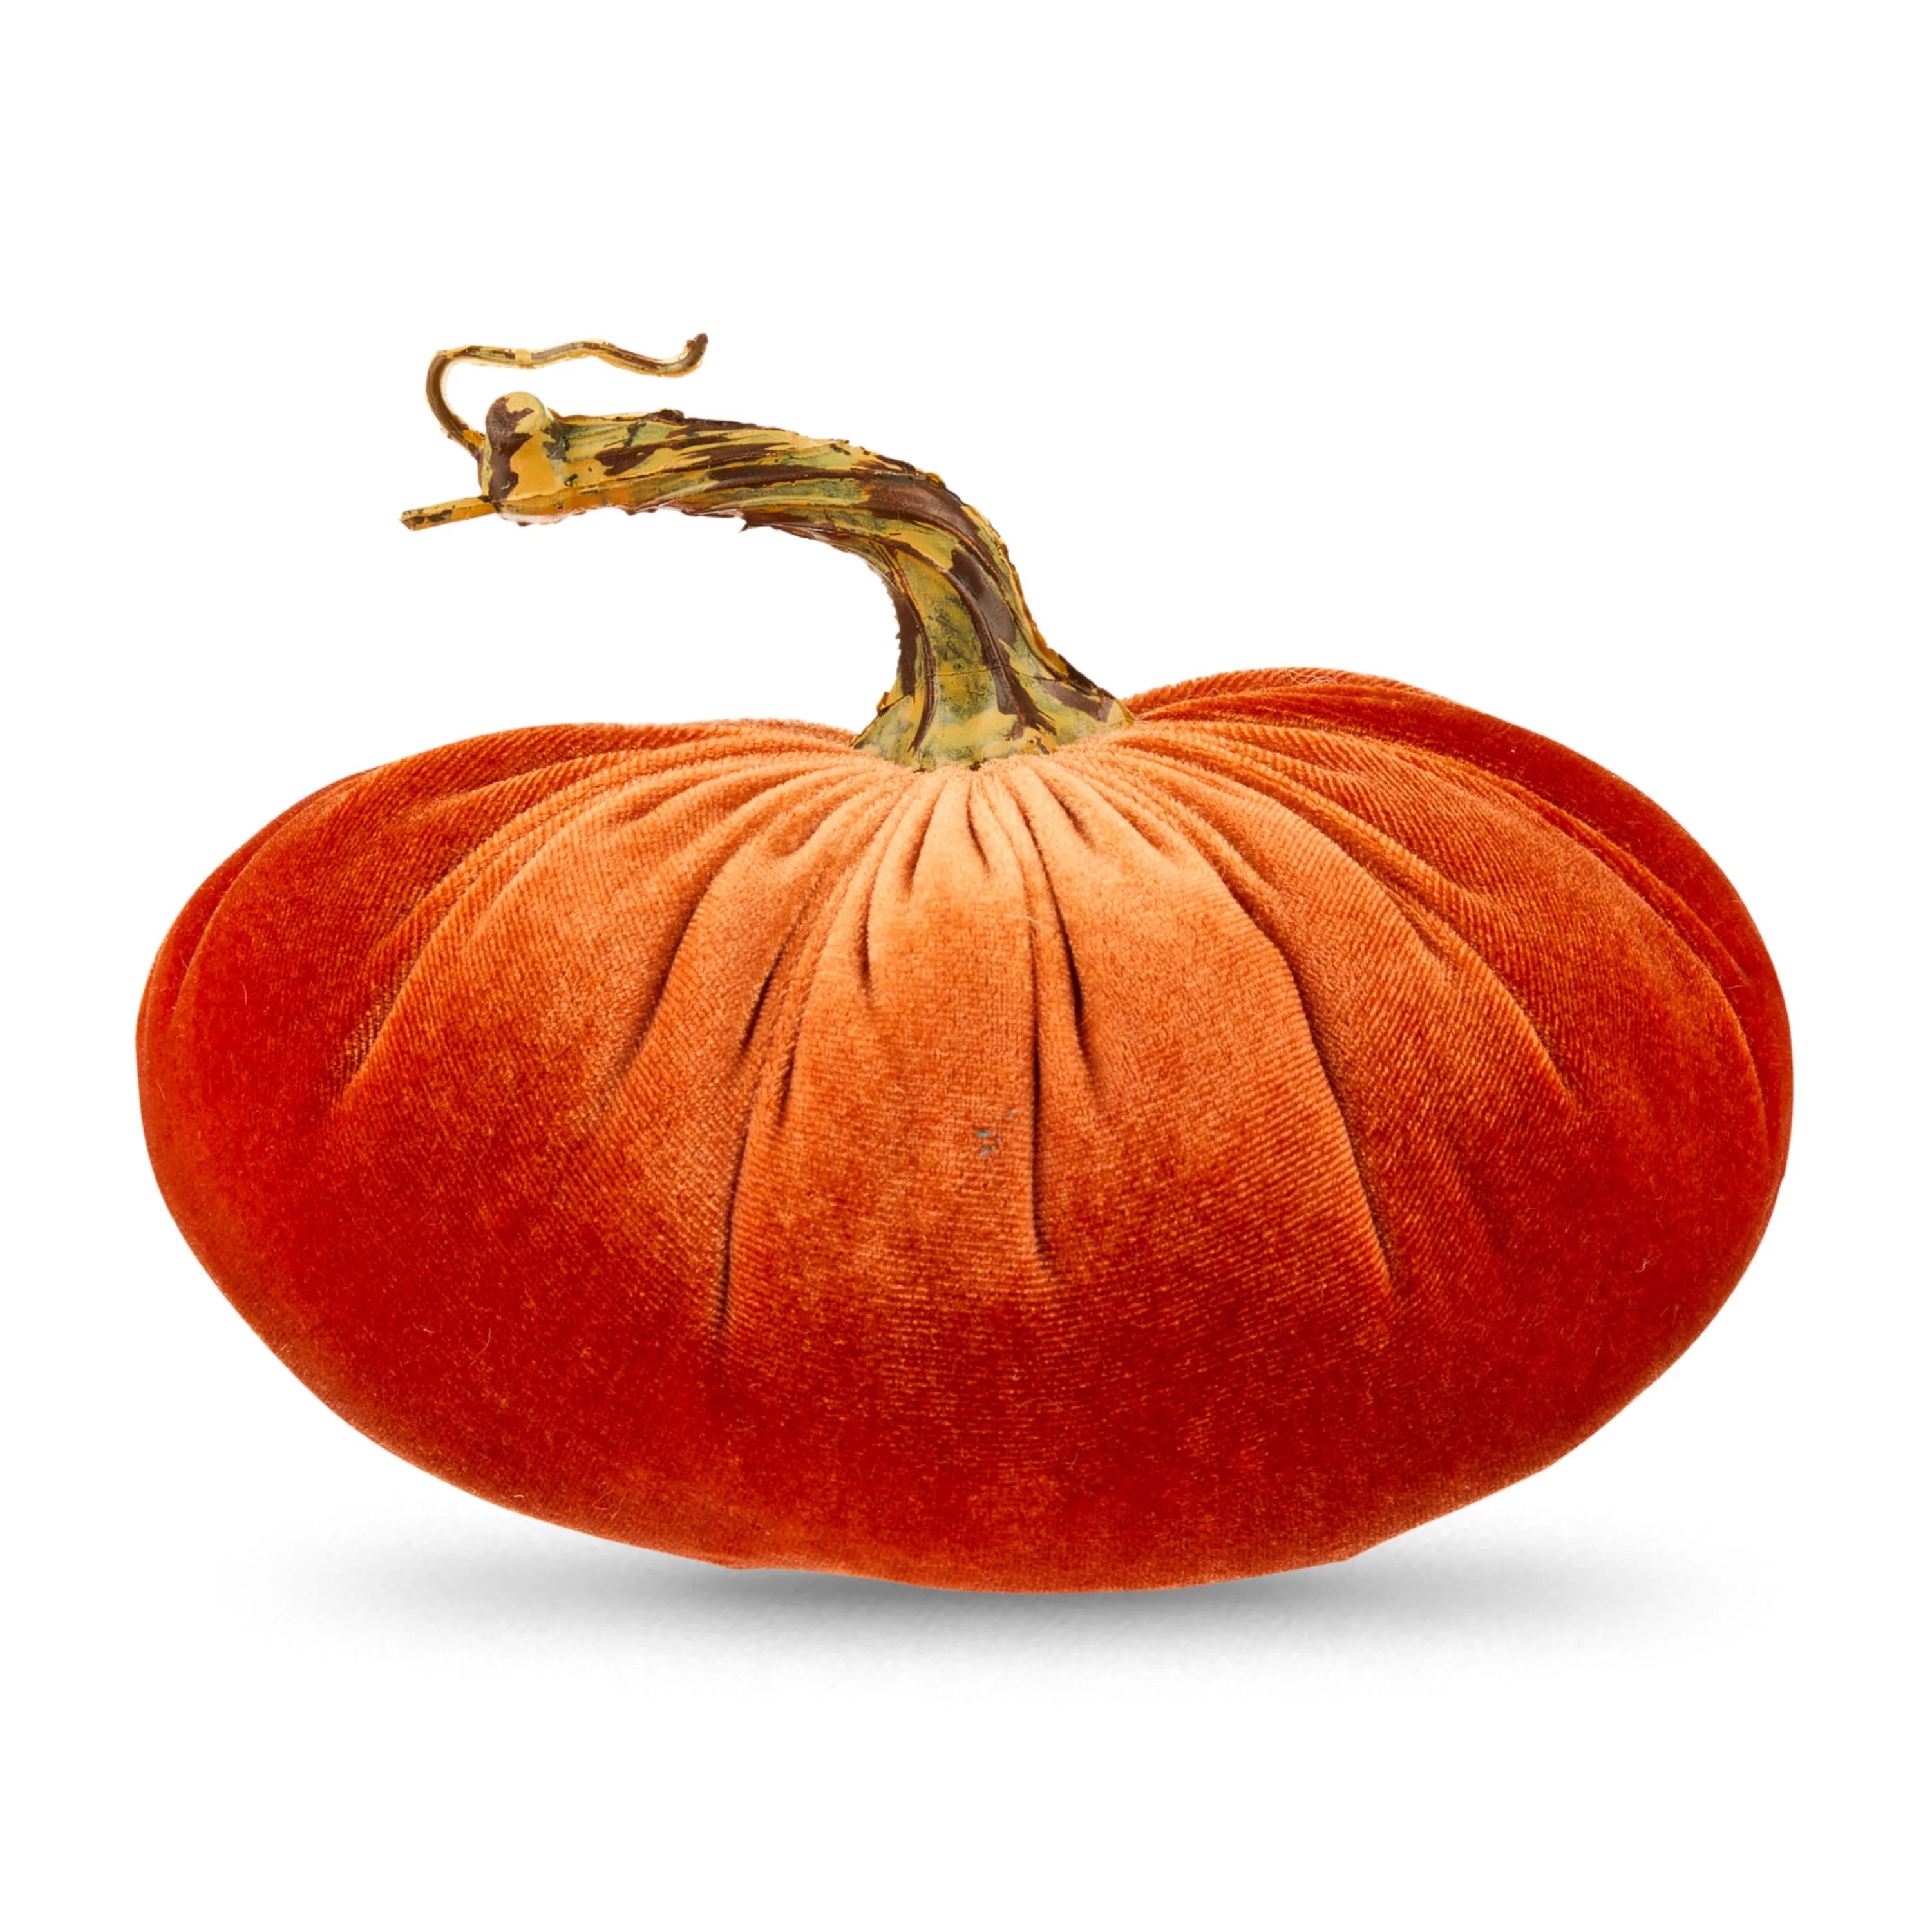 Halloween Orange Fabric Pumpkin Decoration, 6 in L x 6 in W x 5 in H, by Way To Celebrate | Walmart (US)